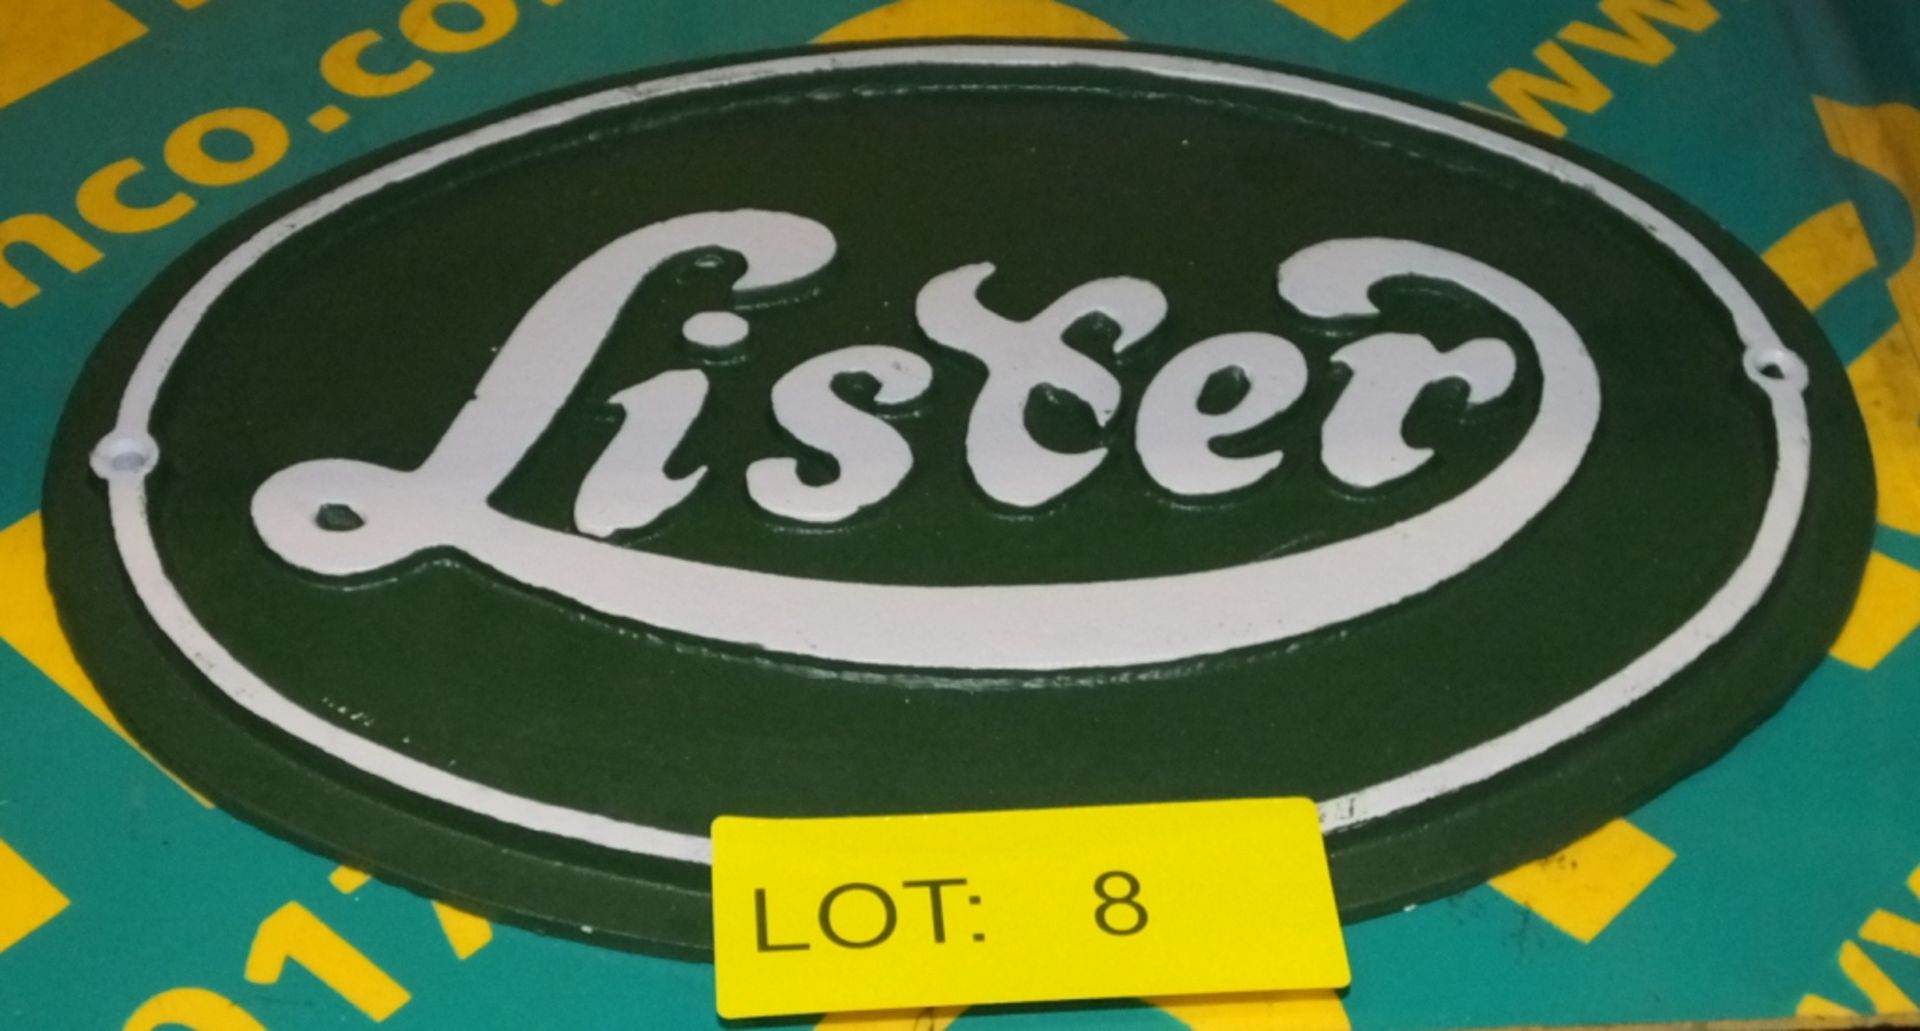 Cast sign - Lister